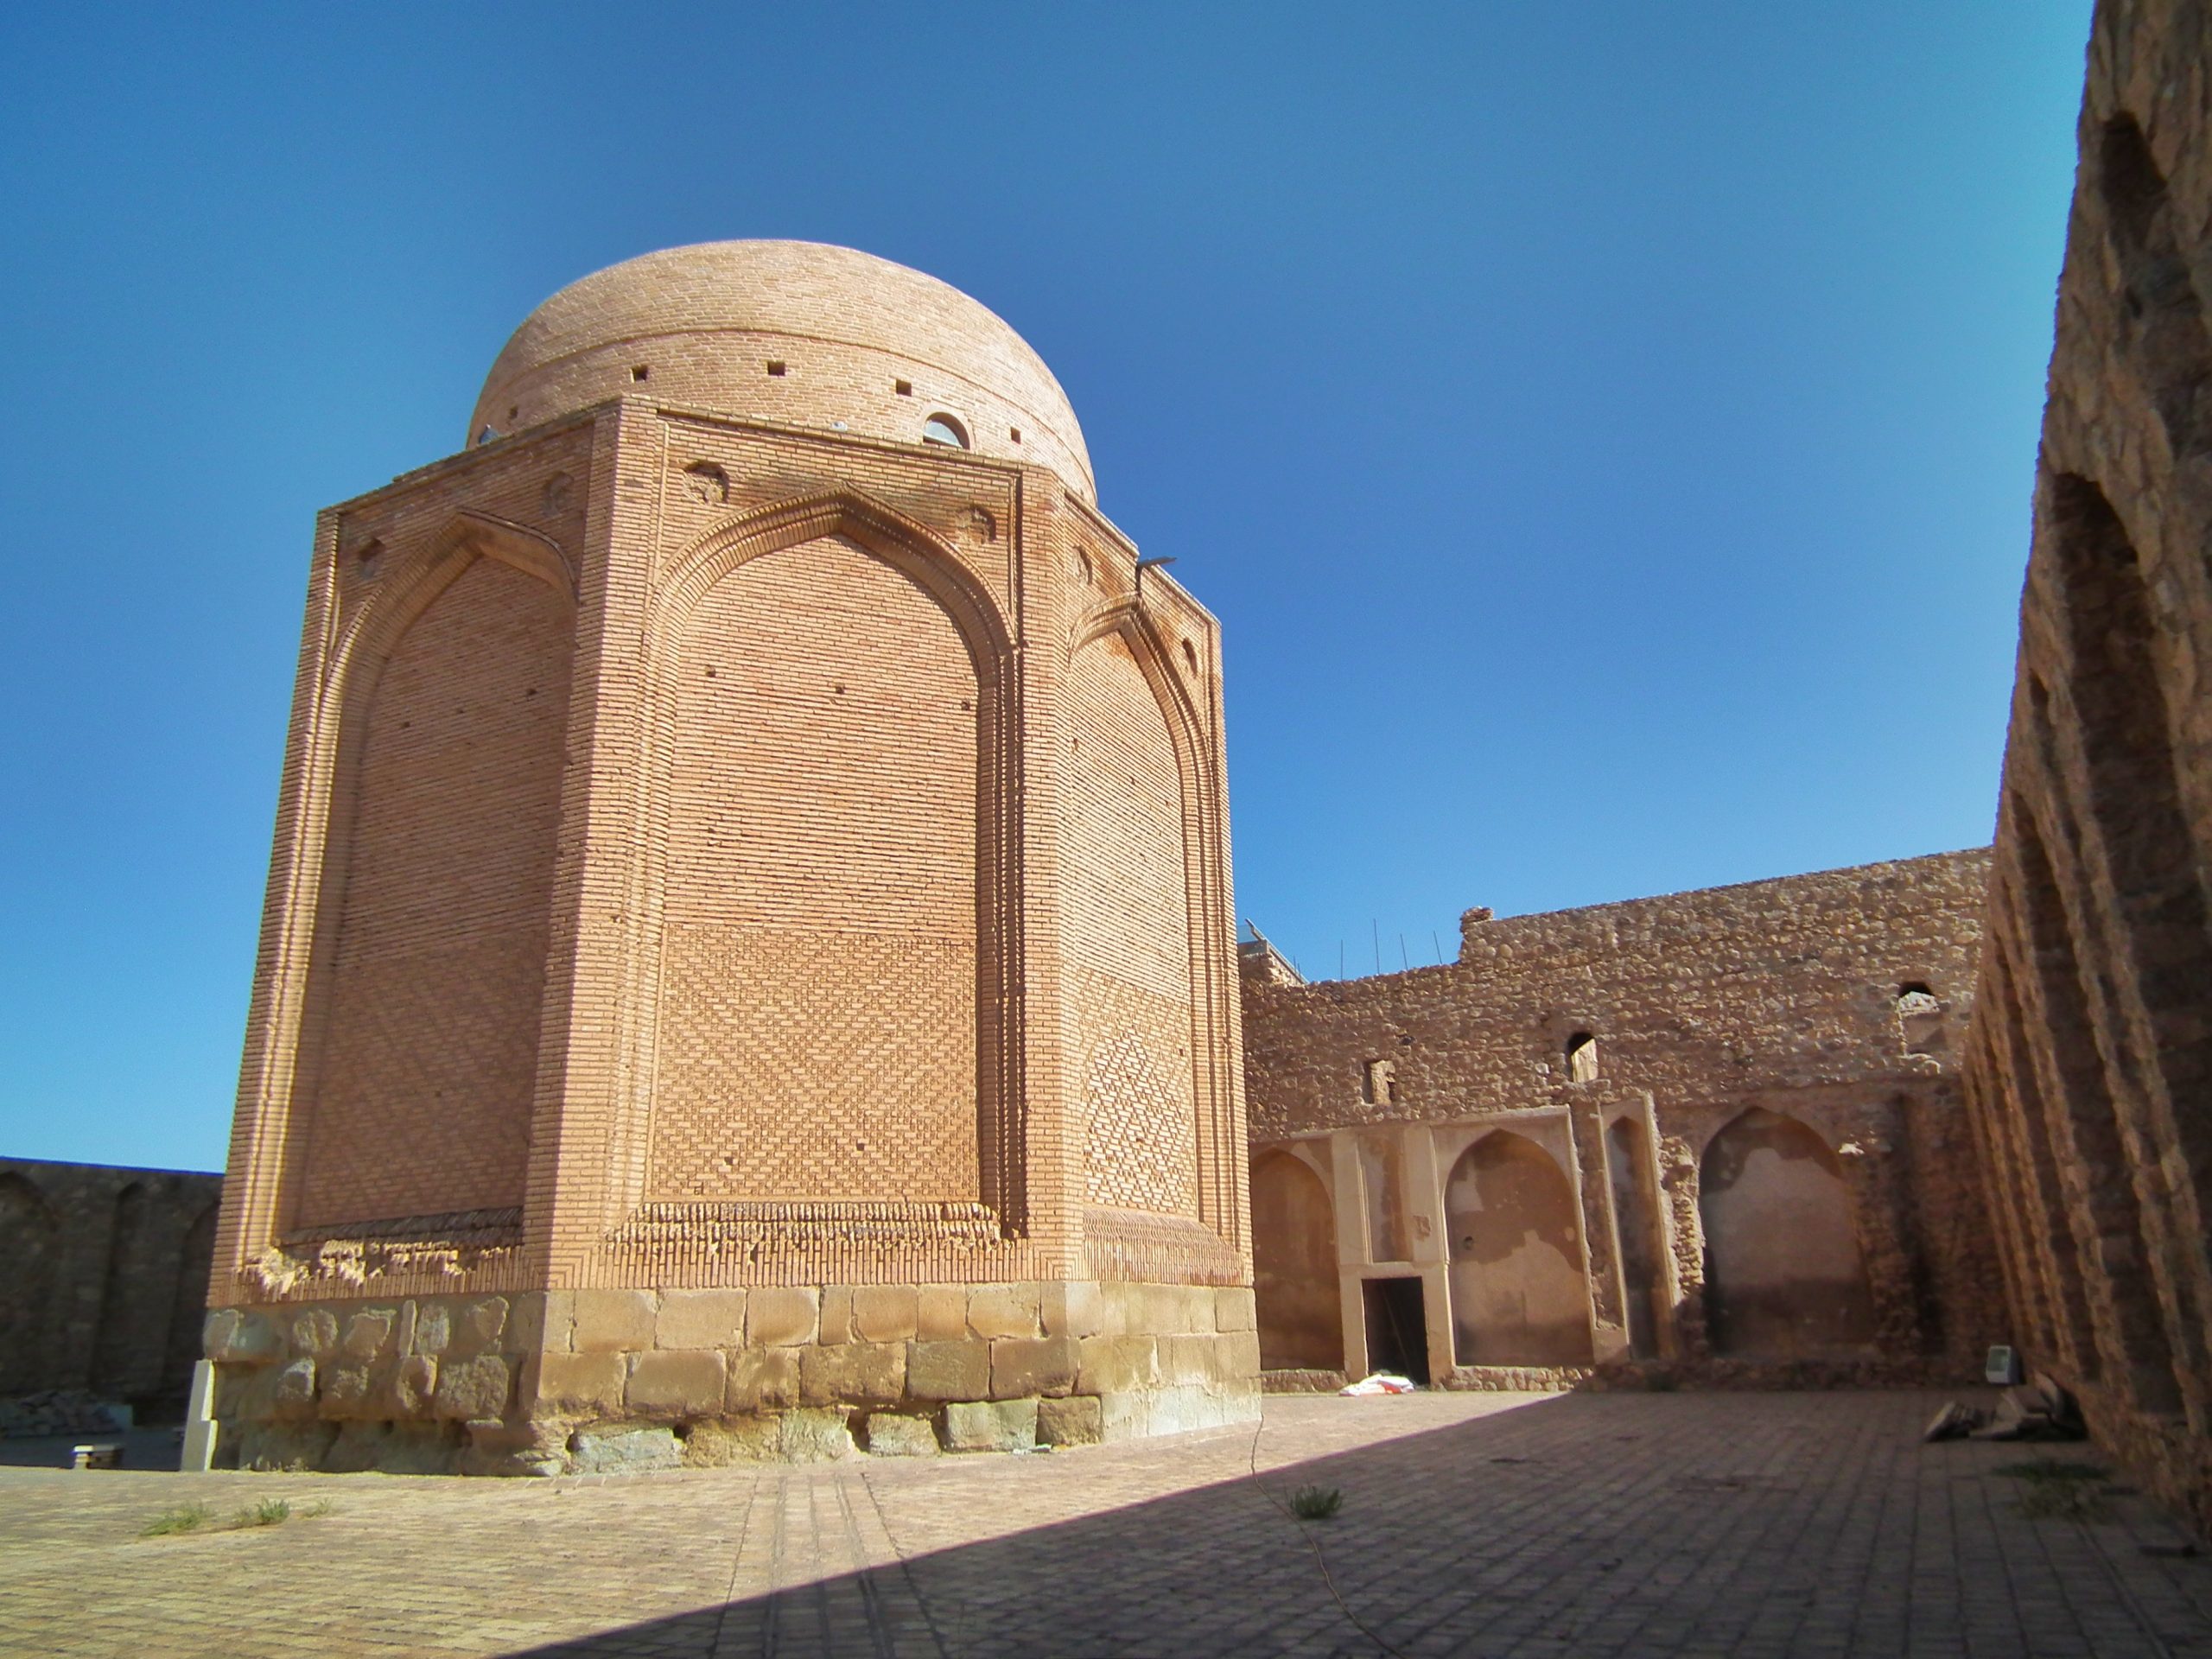 Chalabioghlou Mausoleum